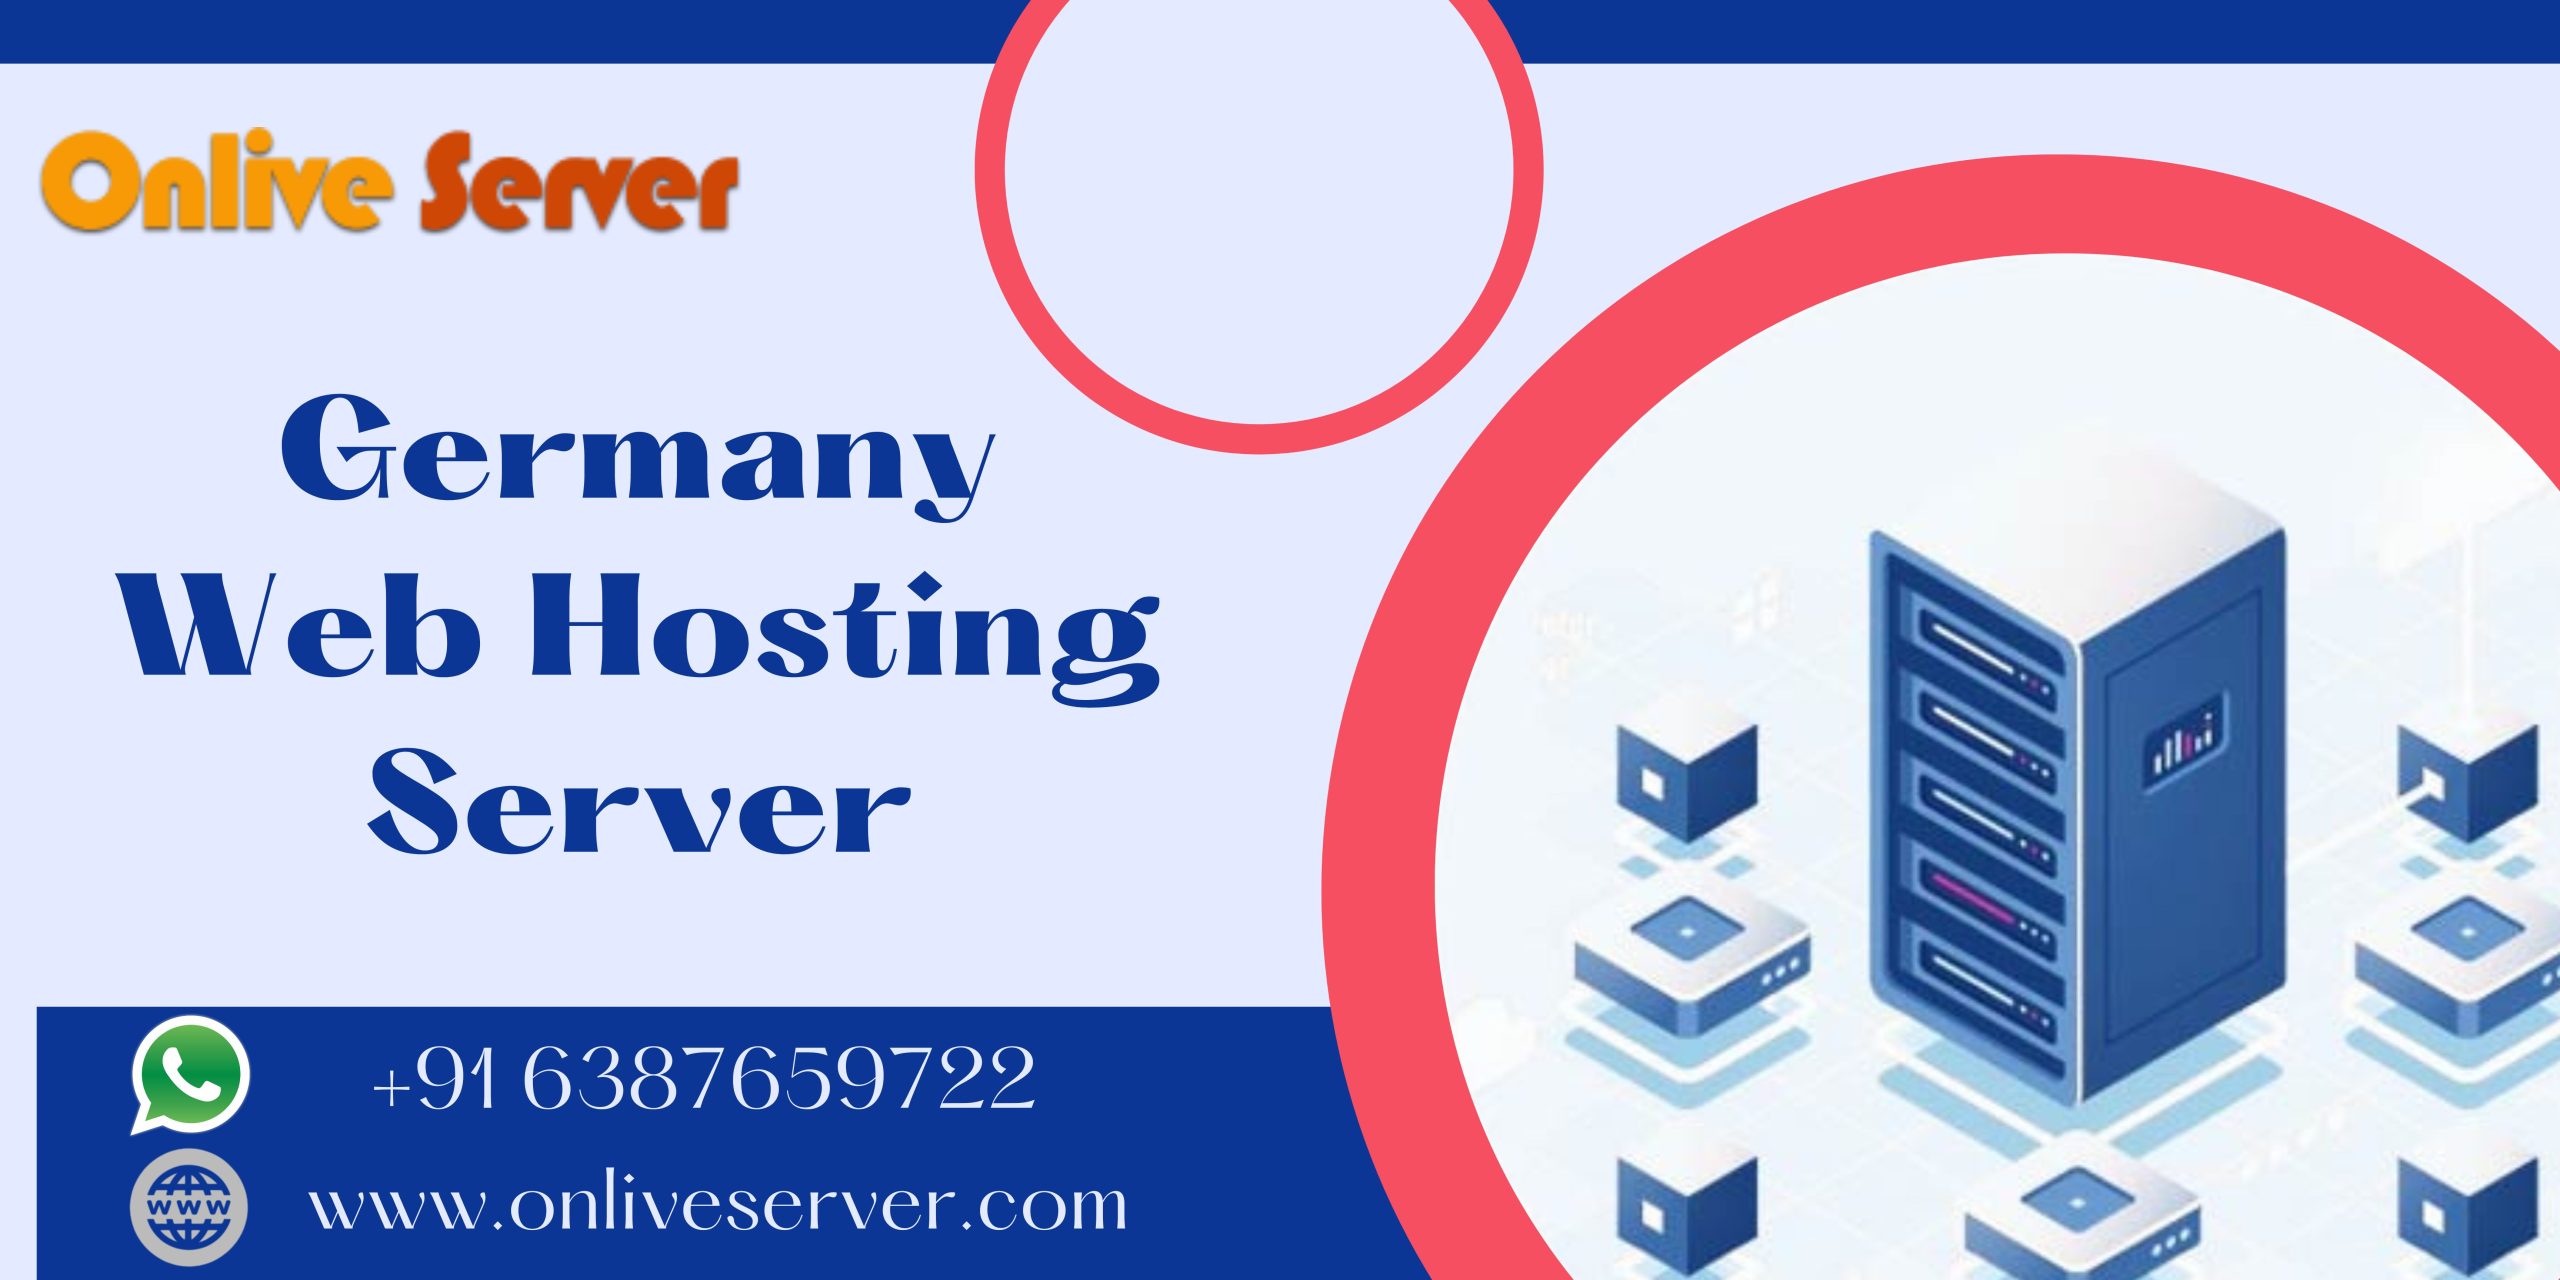 Germany Web Hosting Server